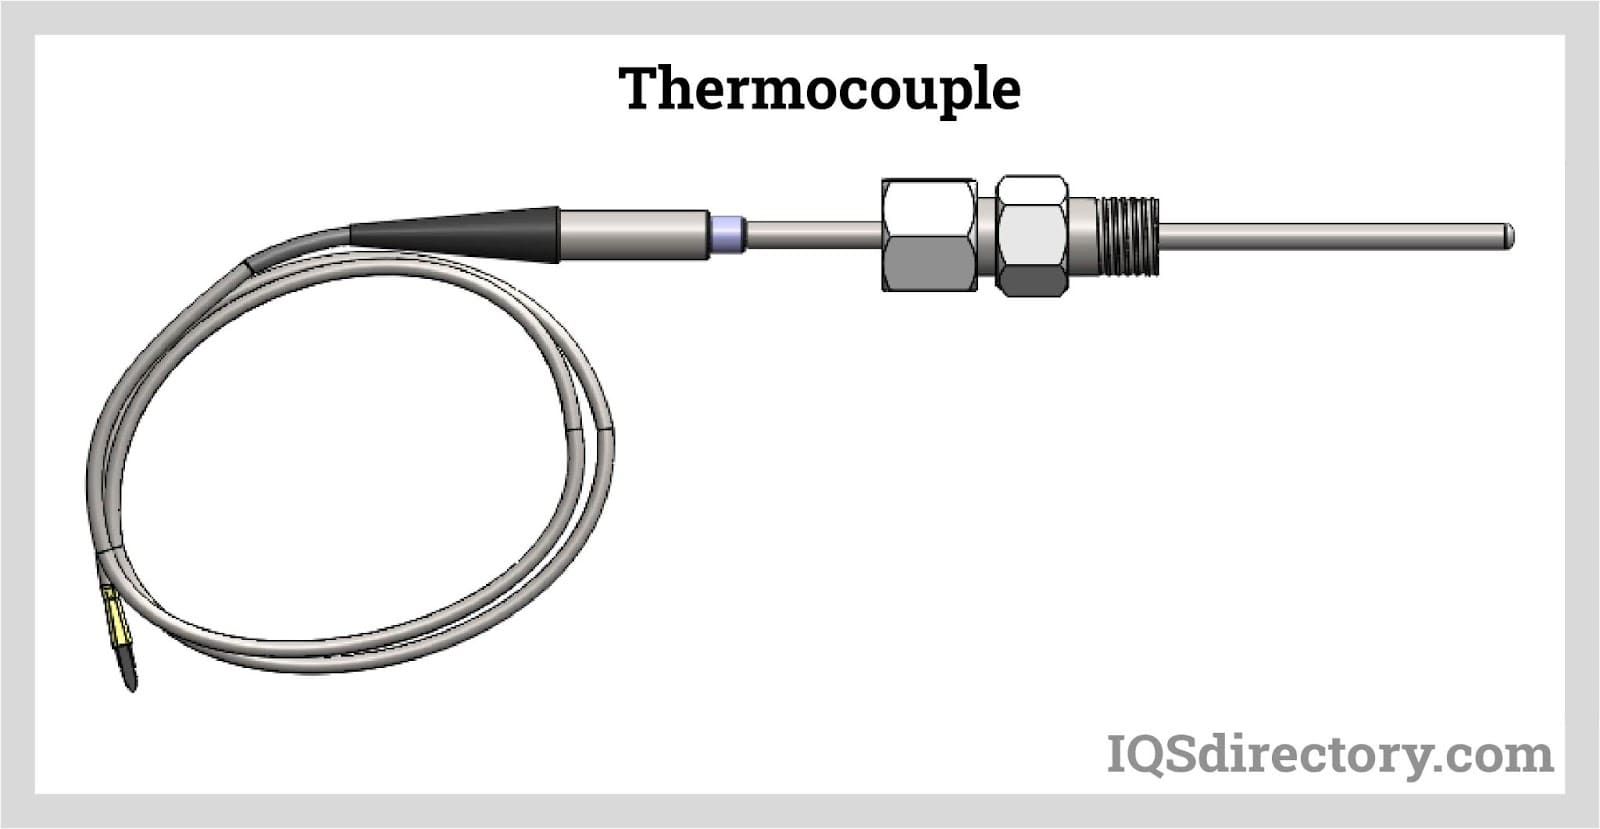 https://www.iqsdirectory.com/articles/thermocouple/temperature-sensors/thermocouple.jpg